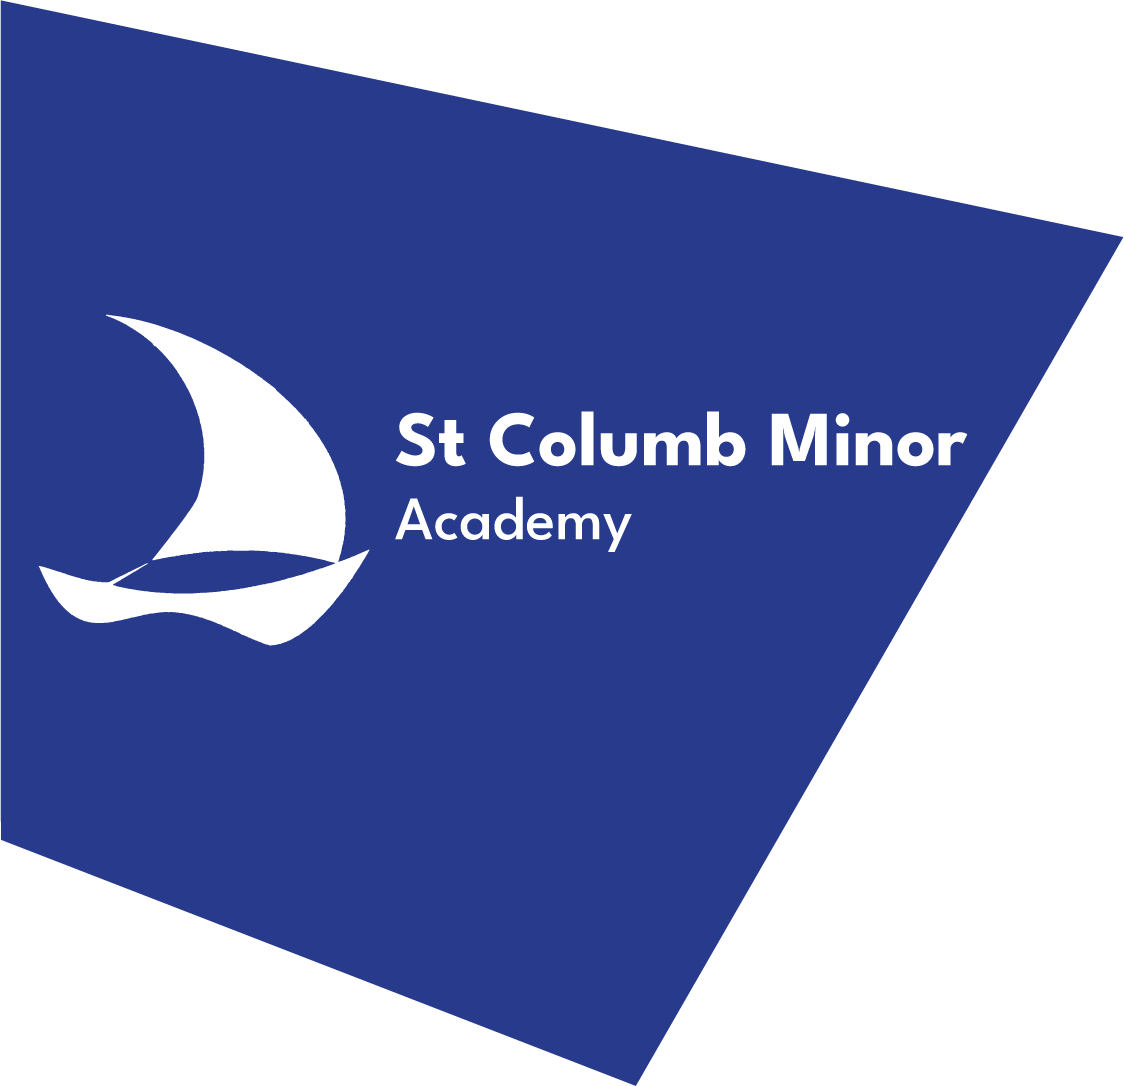 St Columb Minor Academy